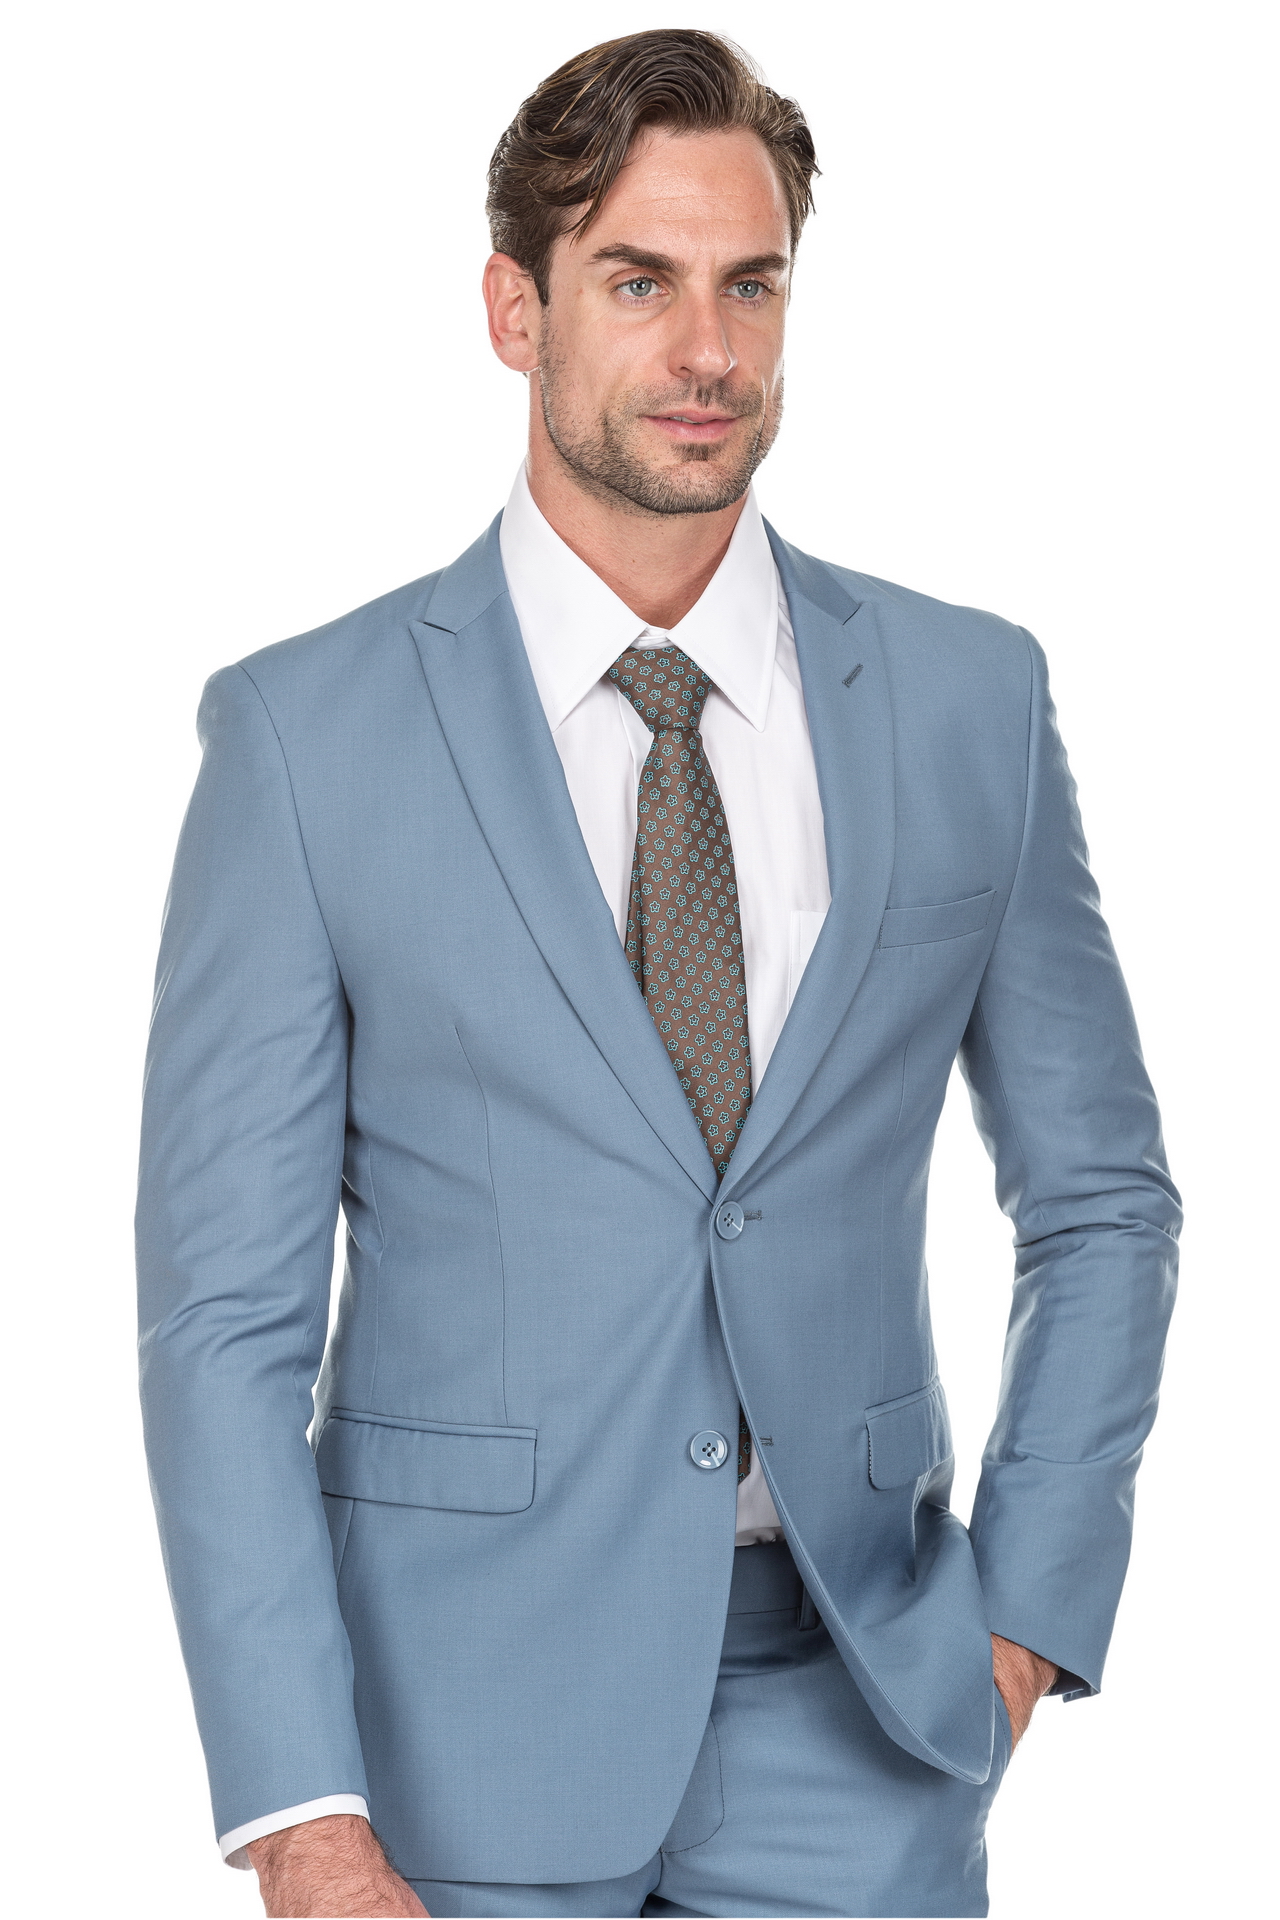 indvirkning Udpakning tin Porto Filo 2-piece set light blue Men's Slim Fit Suit – Portofilo Suits